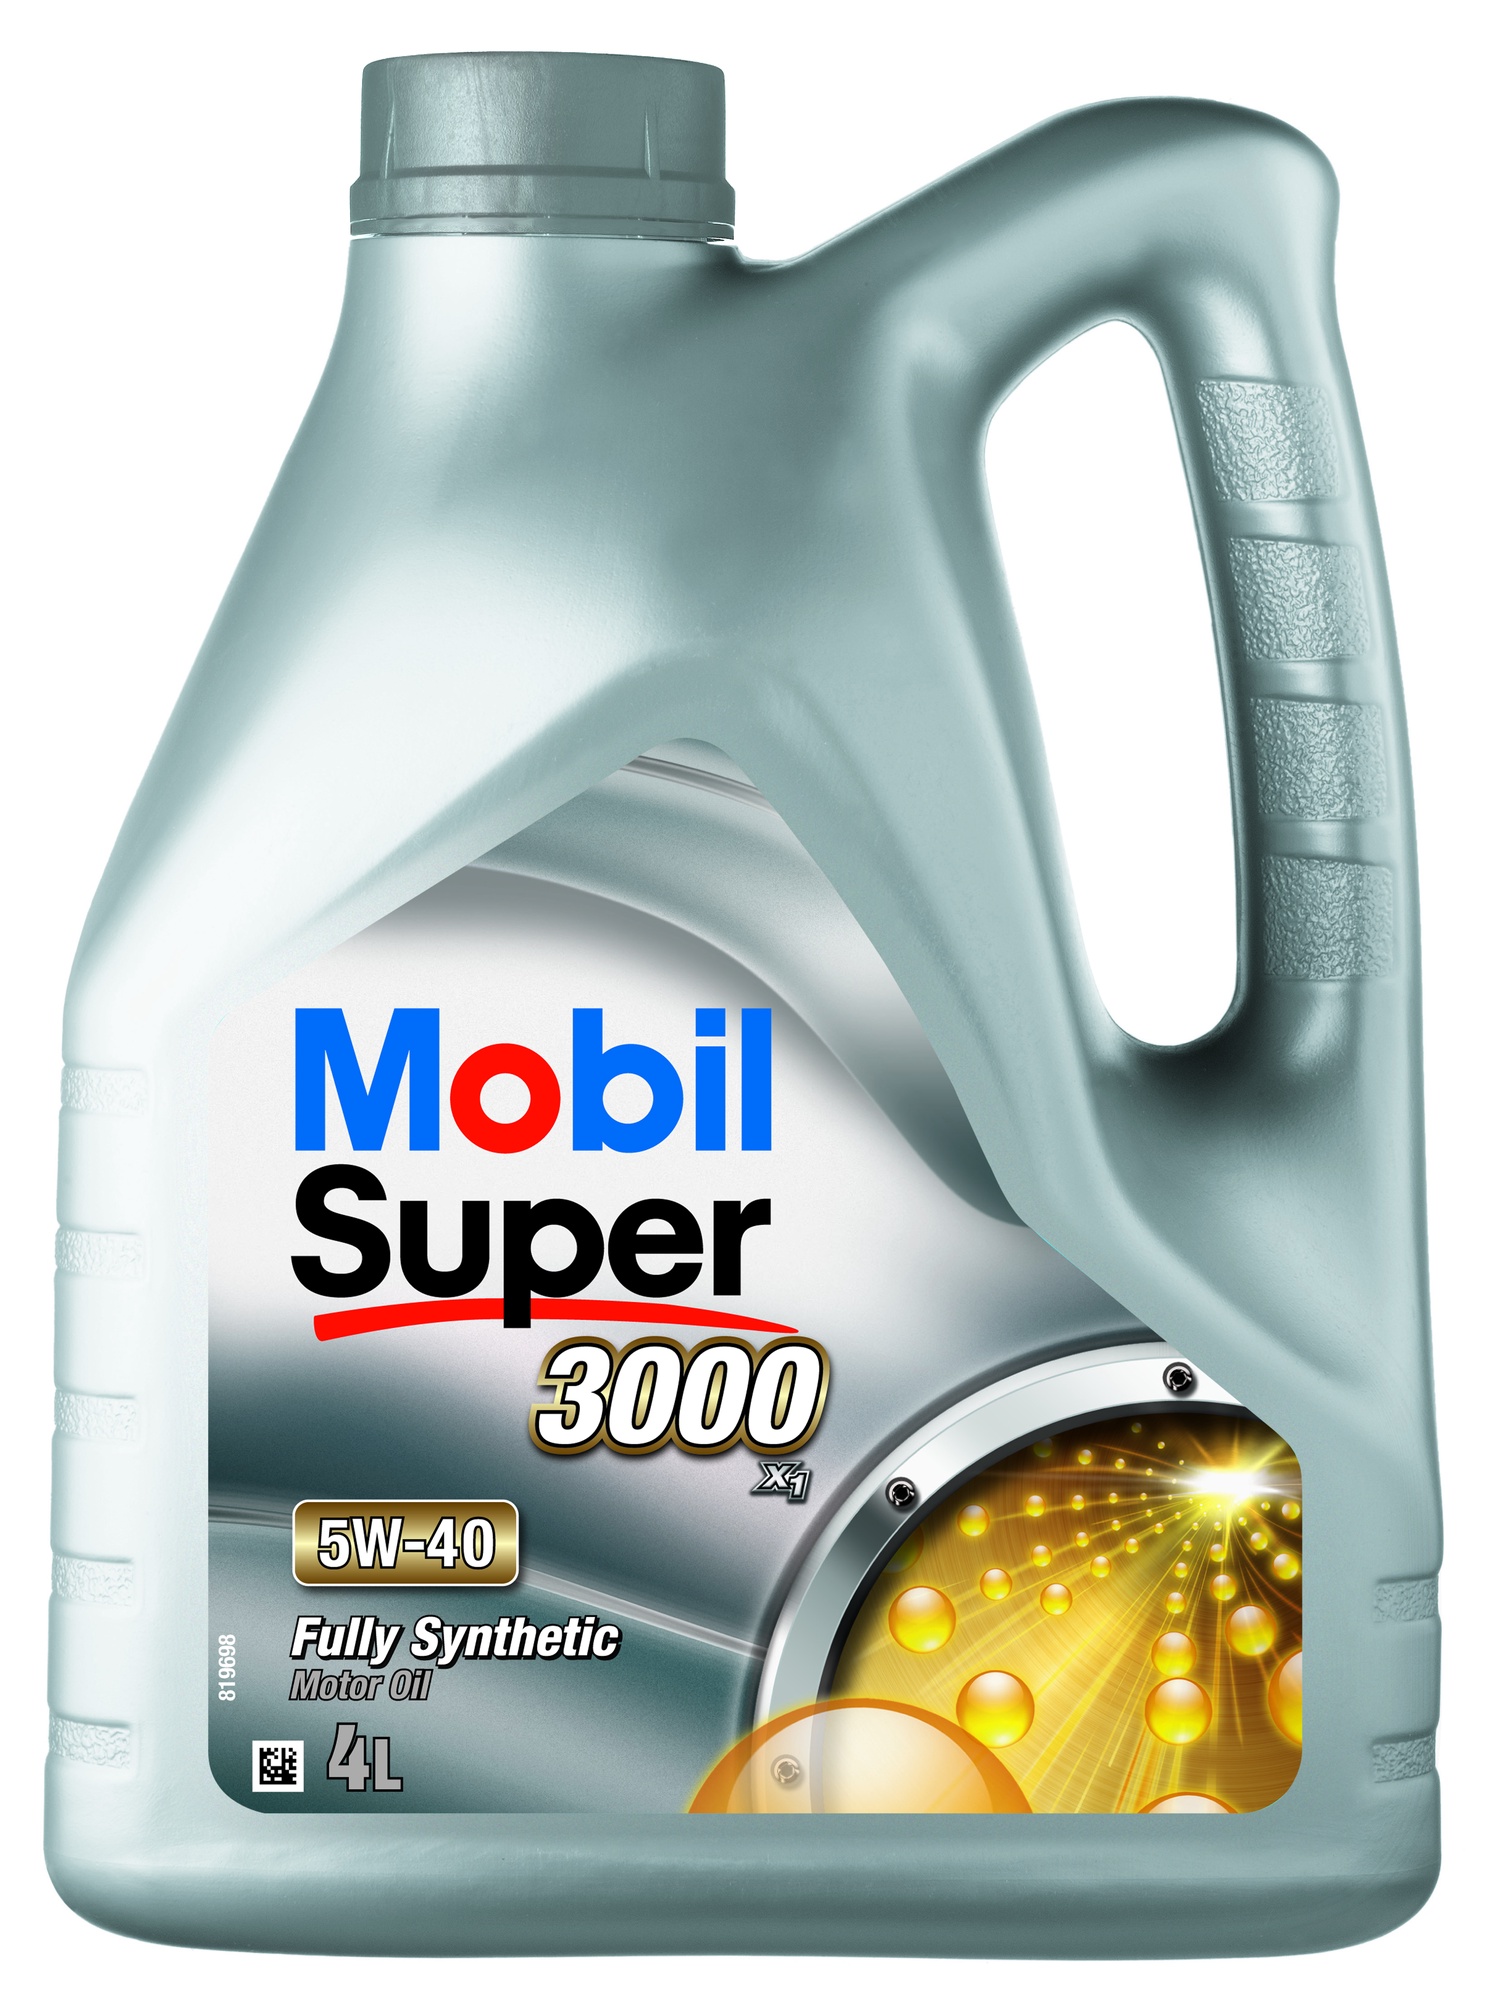  масло Mobil 5W - 40, синтетический, для легкового автомобиля .